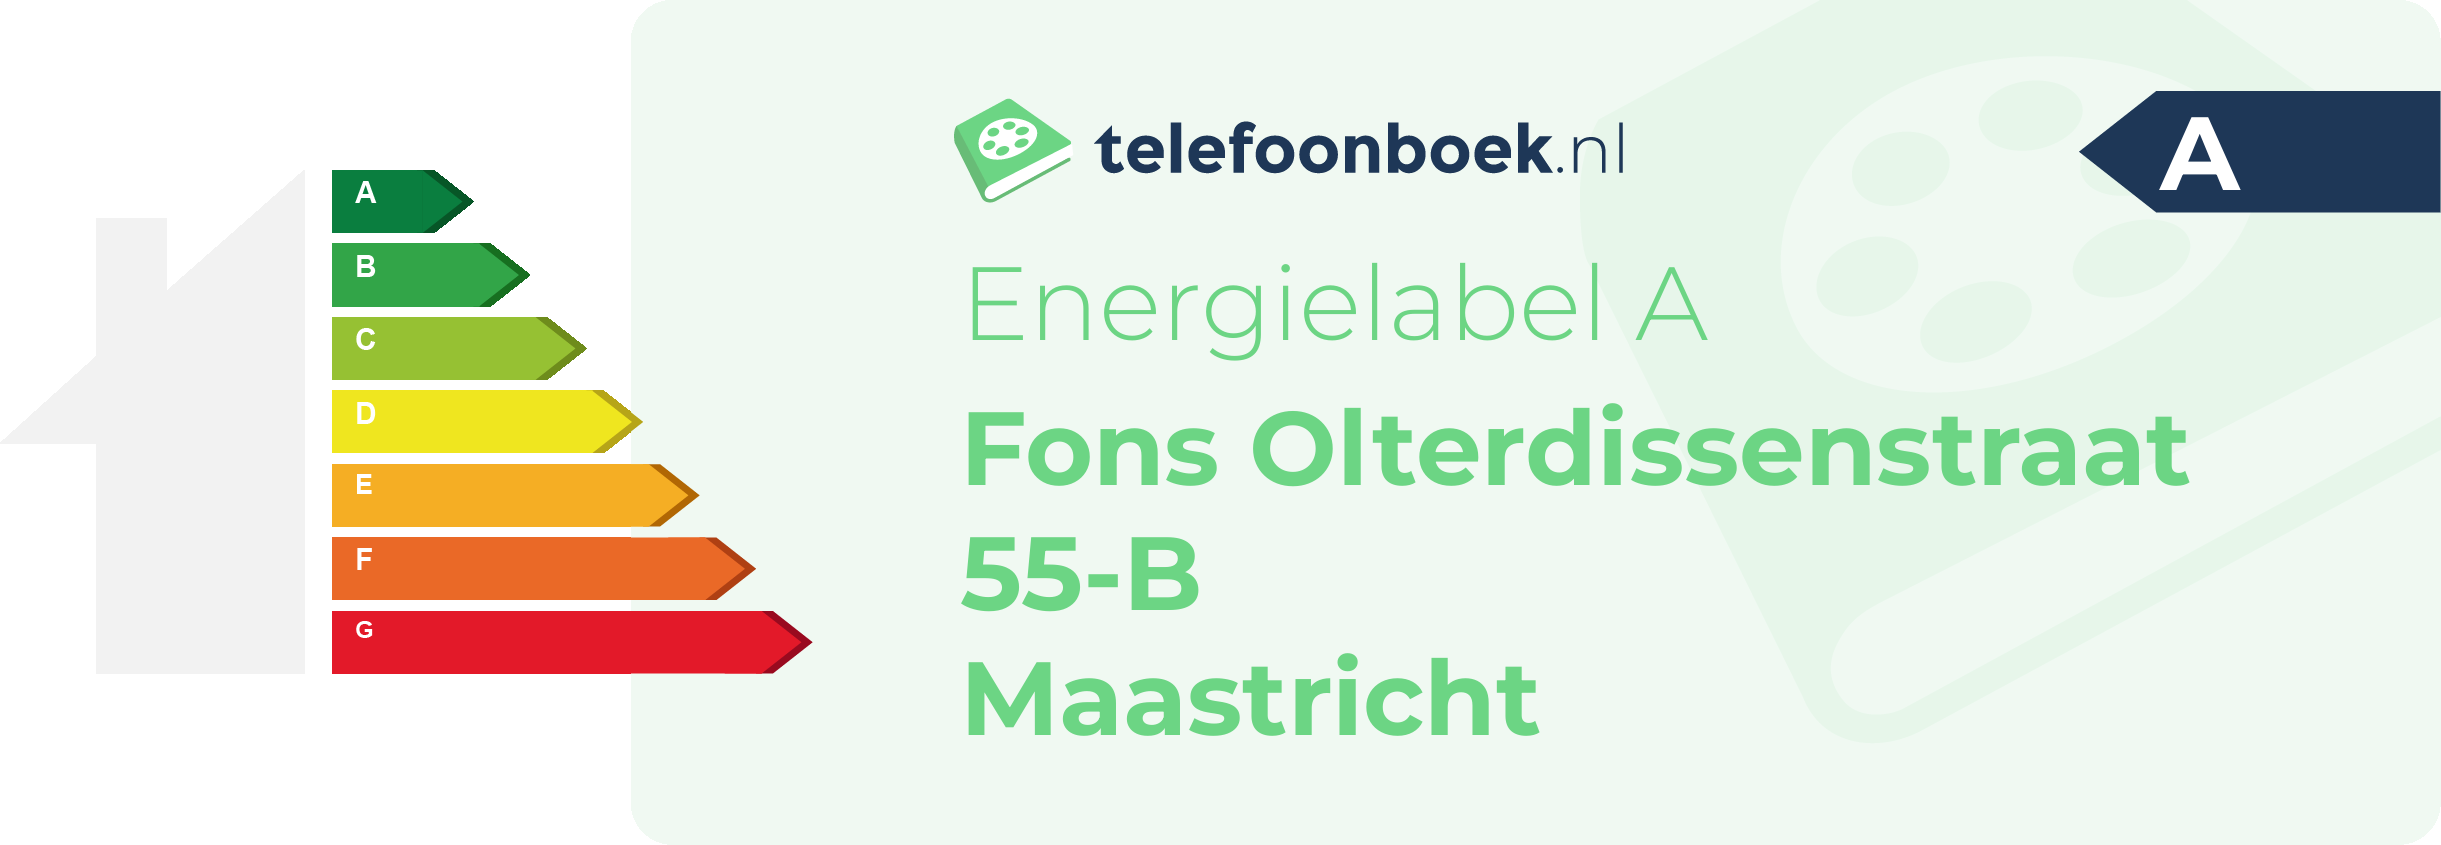 Energielabel Fons Olterdissenstraat 55-B Maastricht